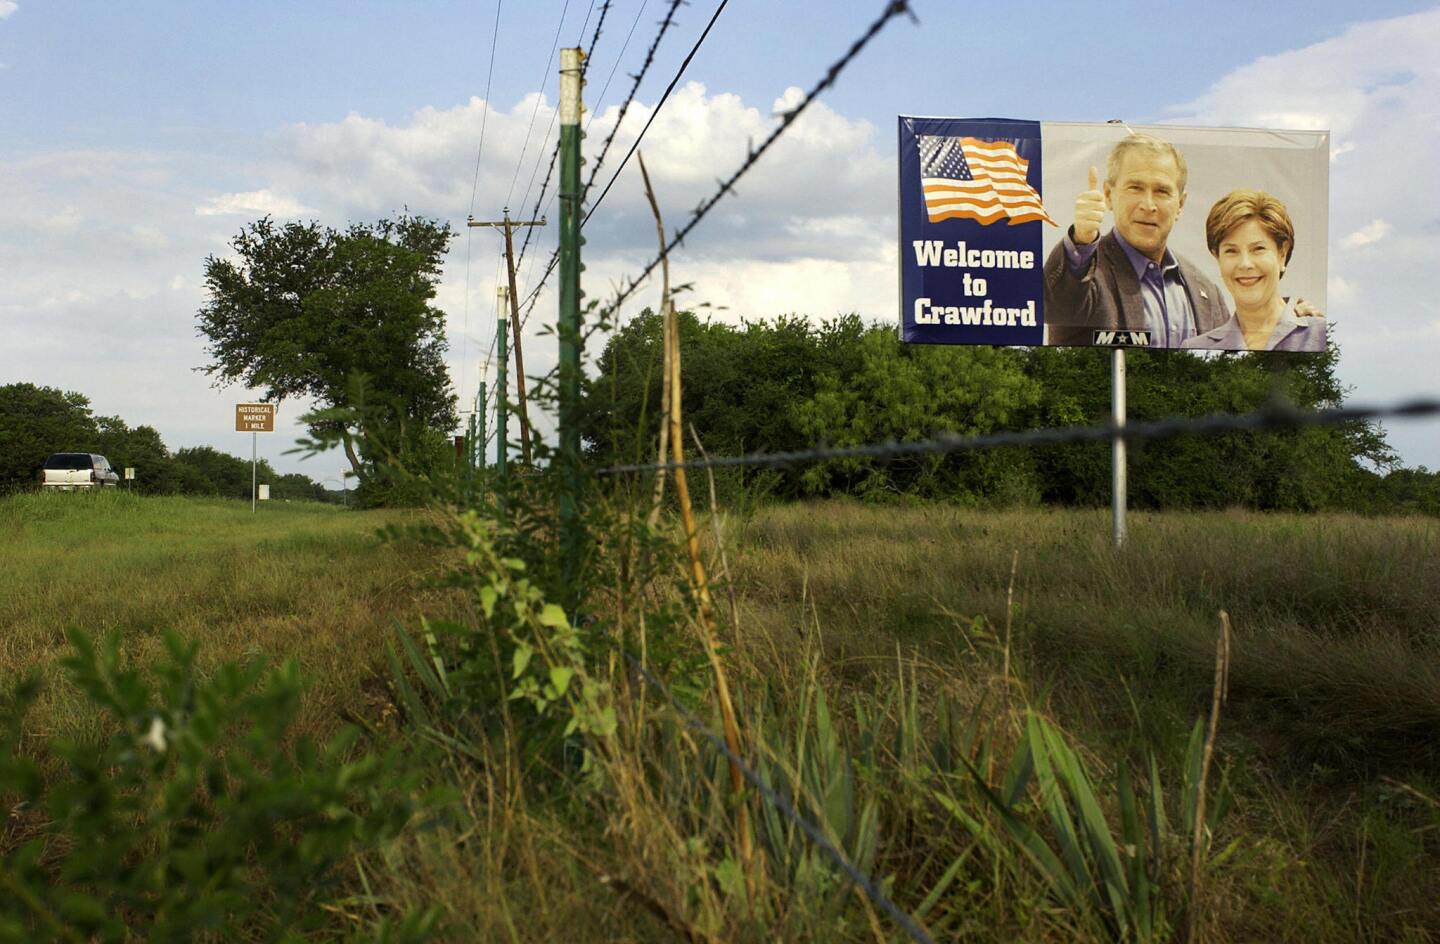 Former President George Bush's ranch